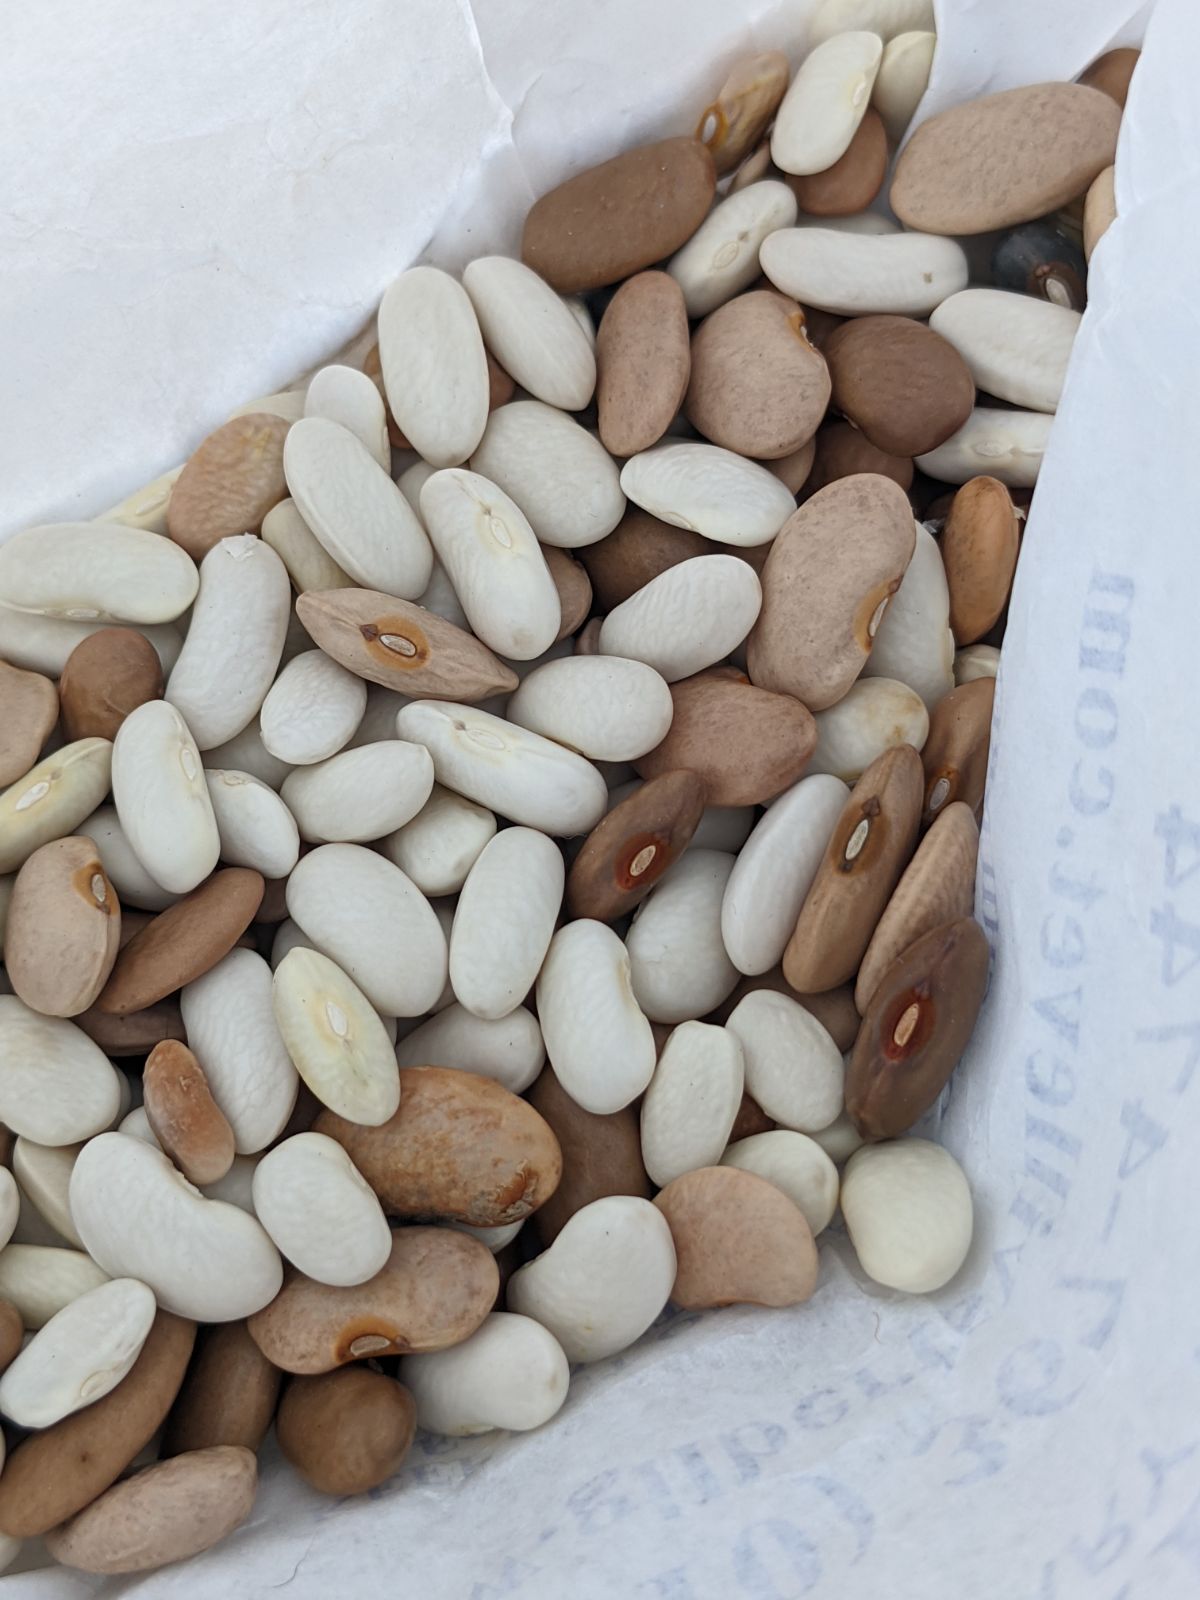 Many green bean seeds inside a white paper prescription bag